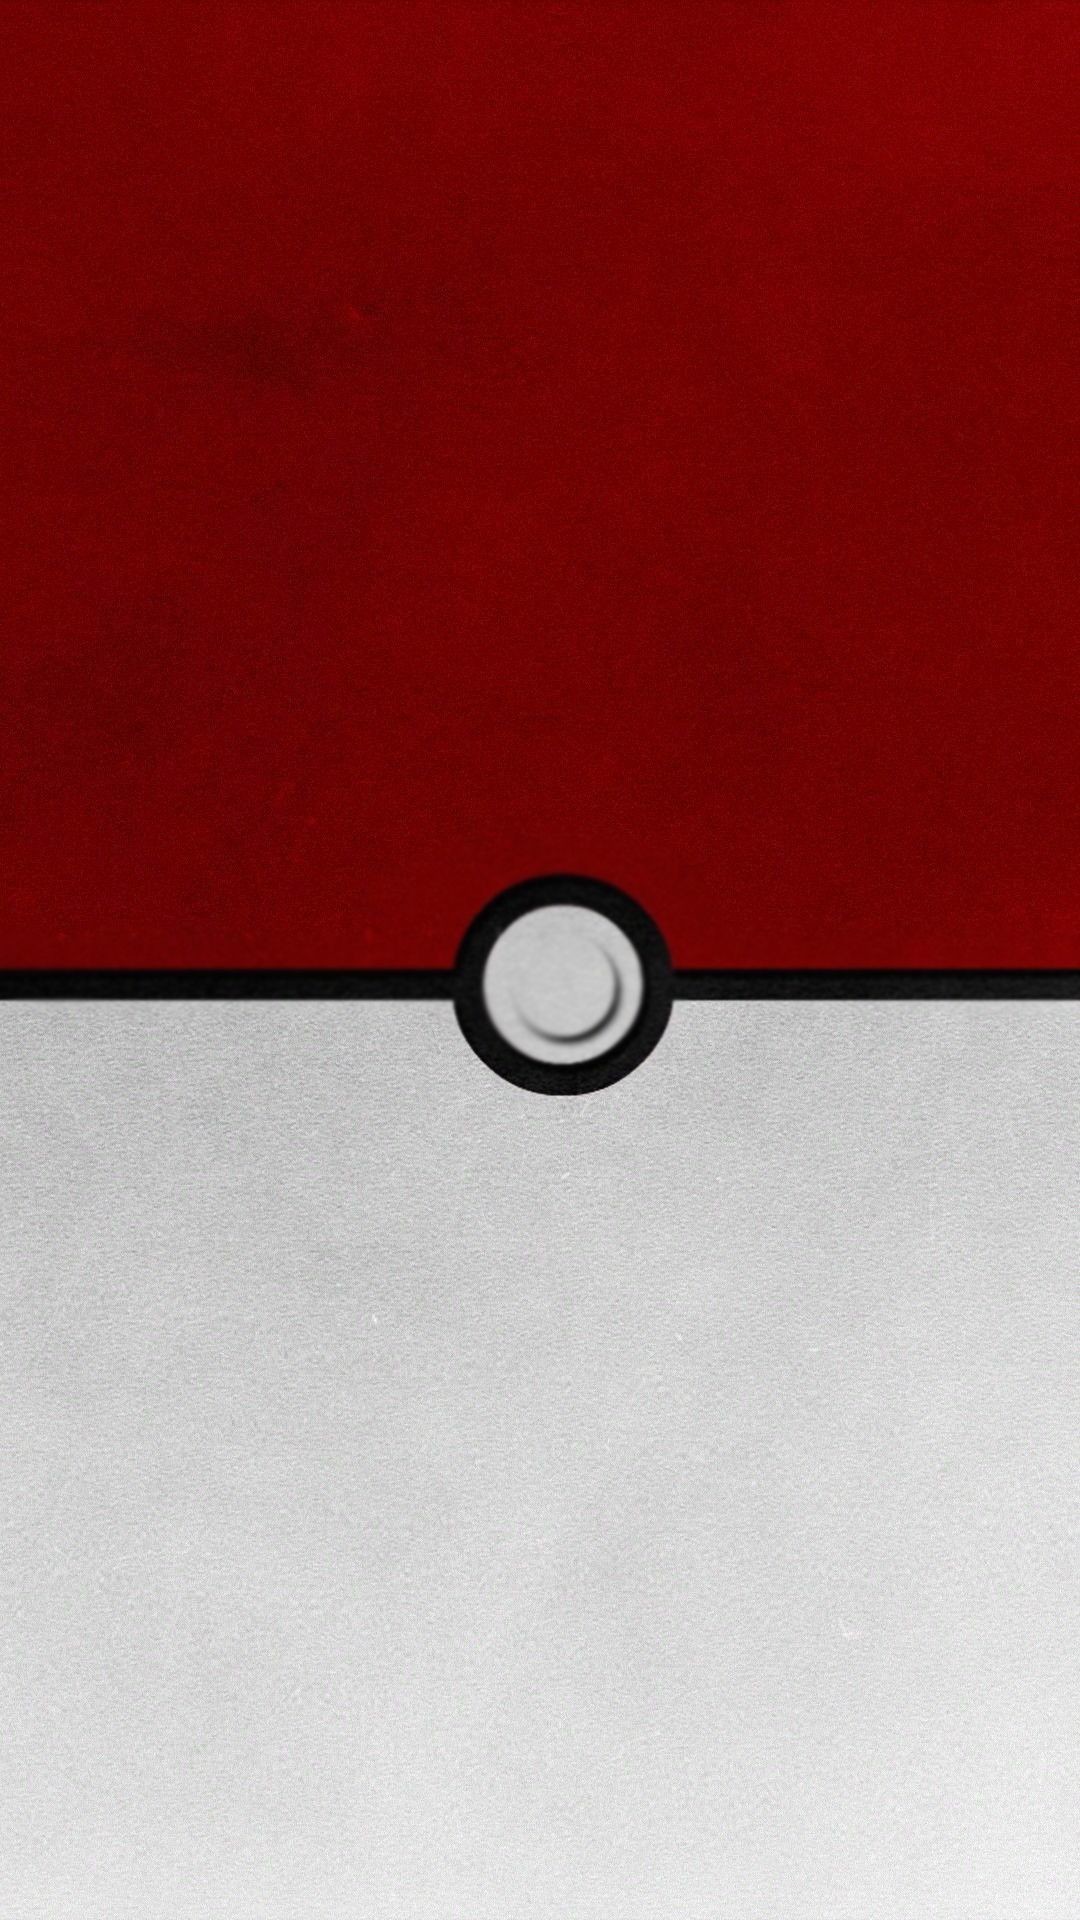 1080x1920 Pokemon Master Ball iPhone 6+ HD Wallpaper - http://freebestpicture.com